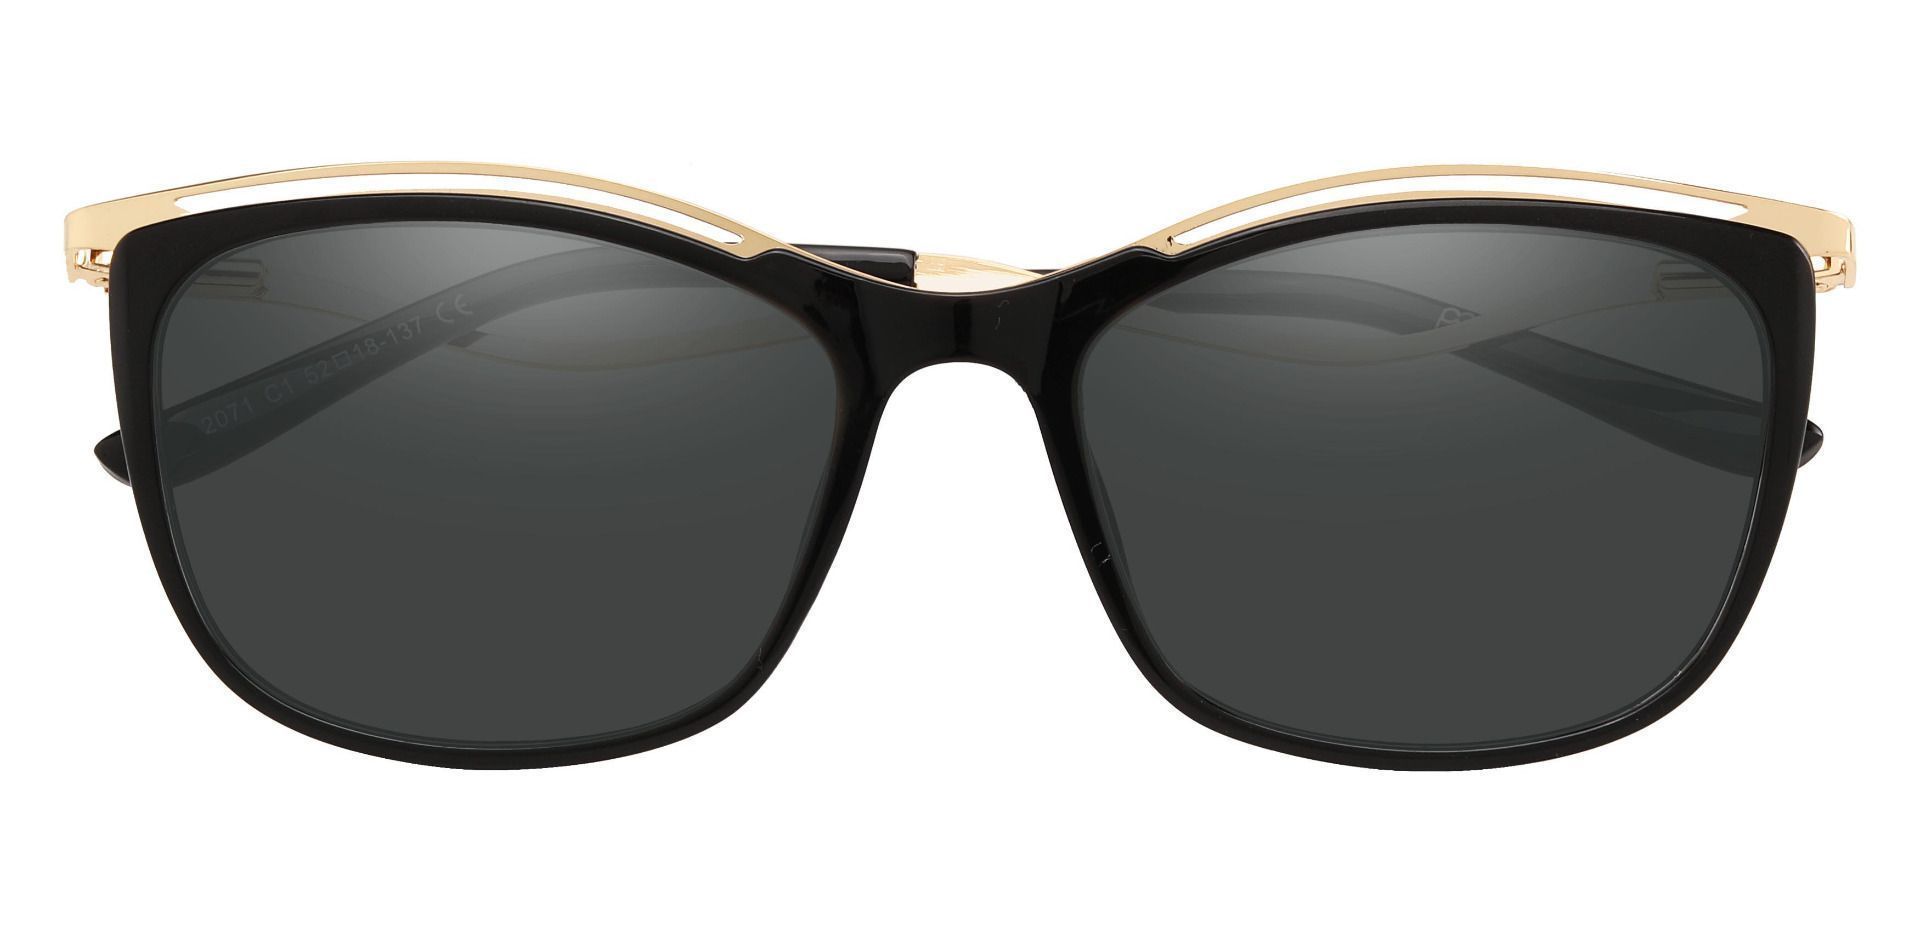 Enola Cat Eye Progressive Sunglasses - Black Frame With Gray Lenses